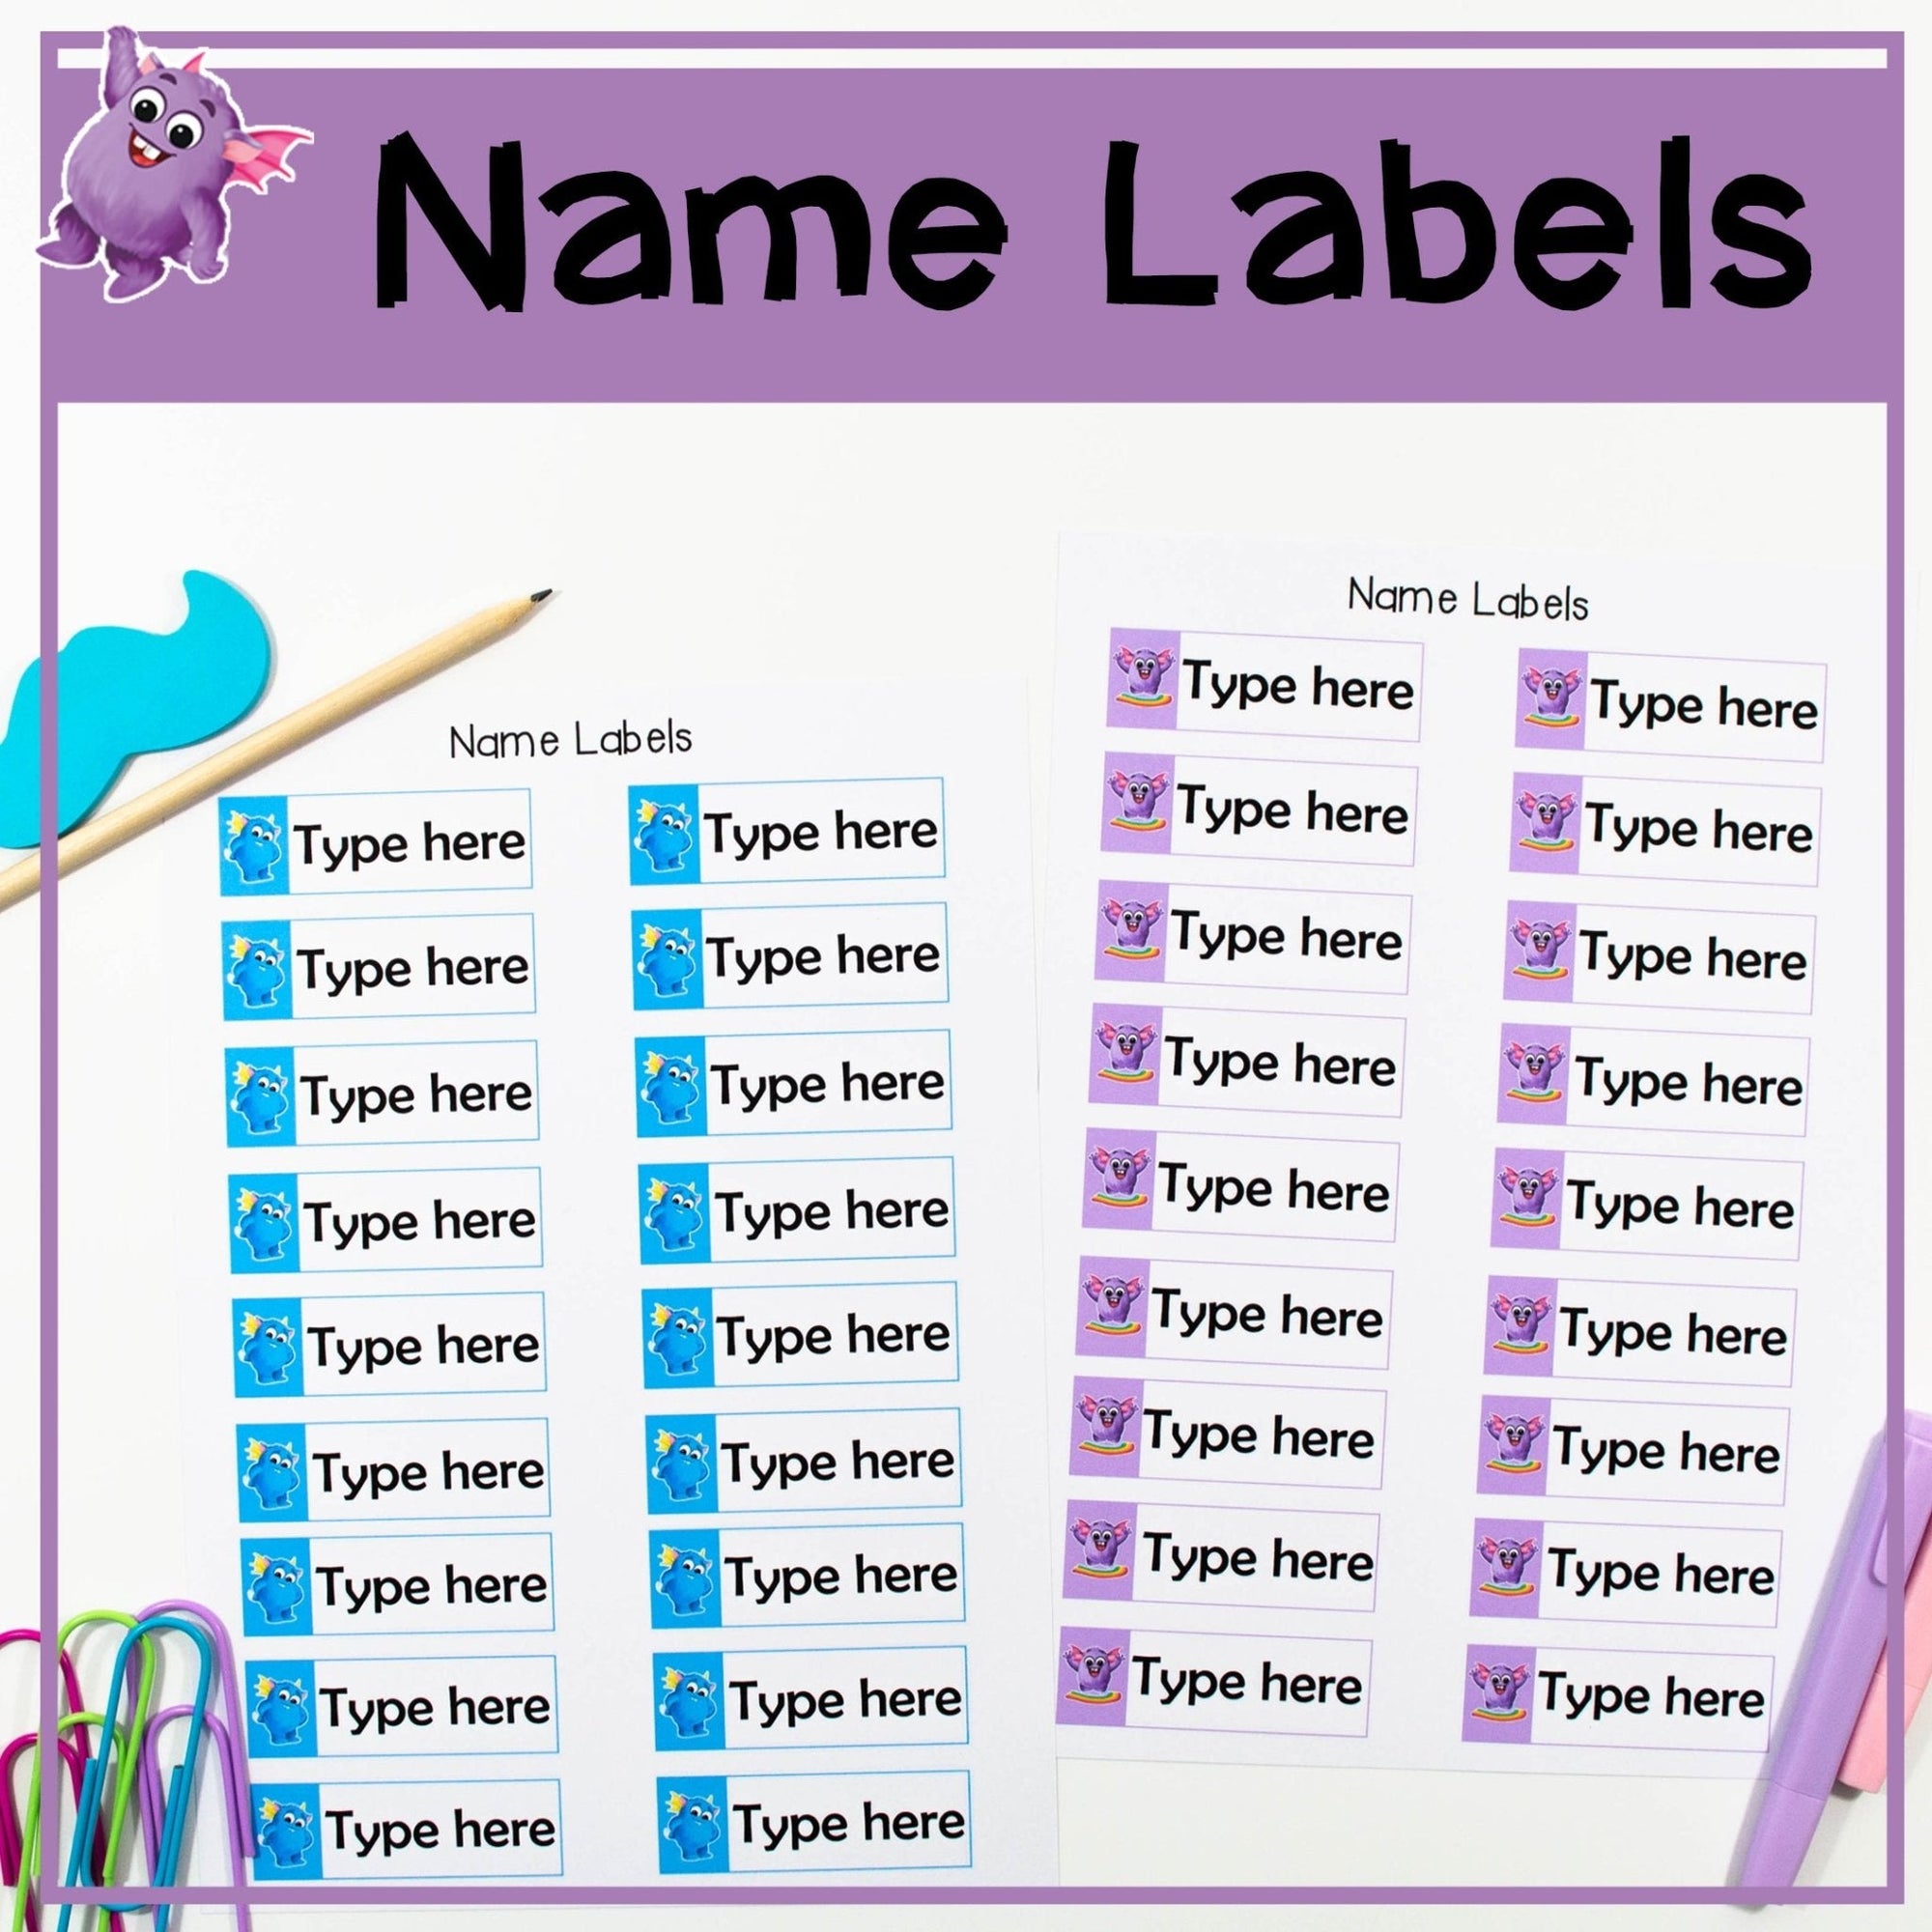 Name Labels - Blue and Purple - Your Teacher's Pet Creature